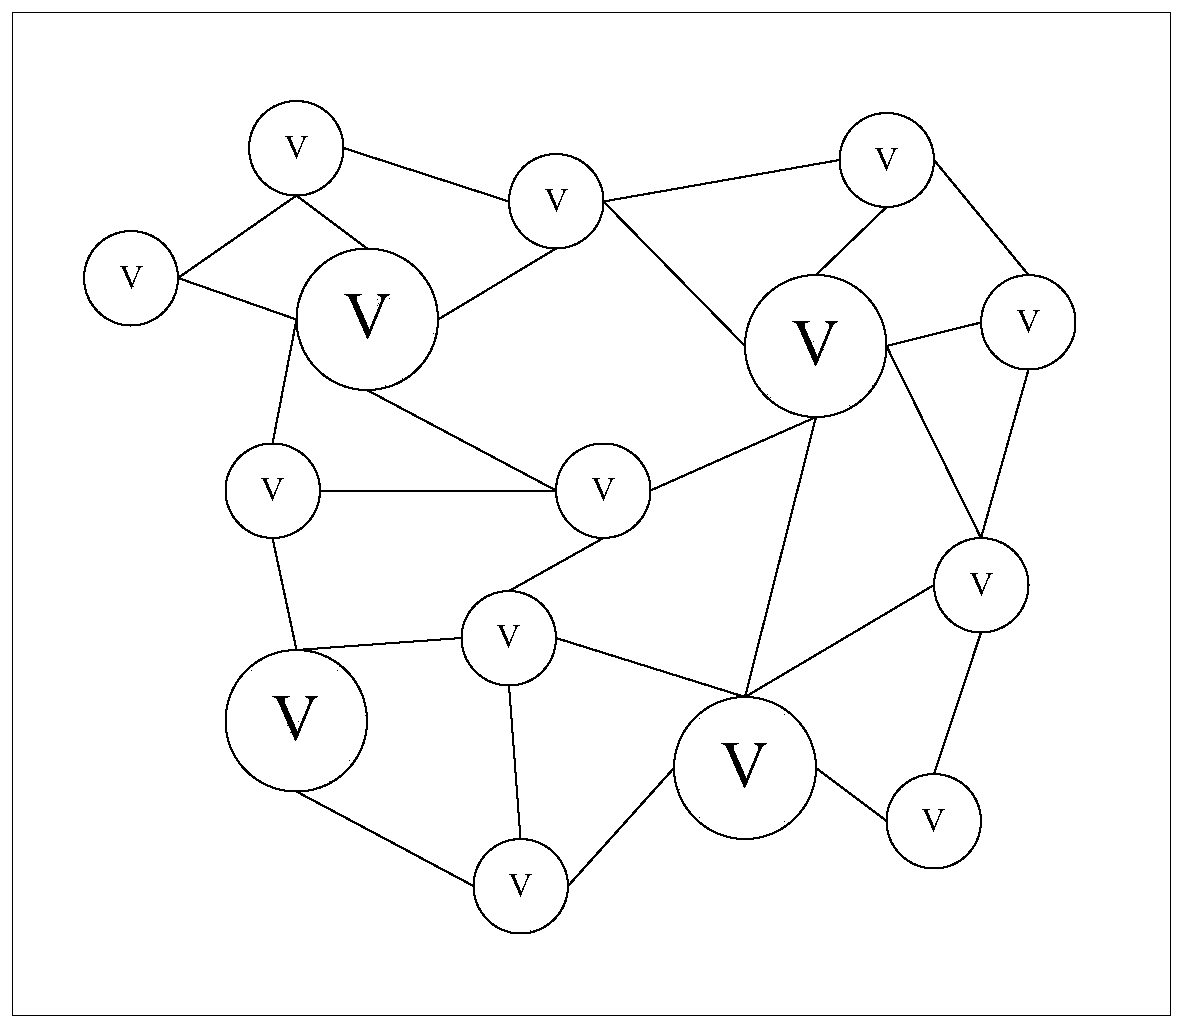 Public blockchain network system